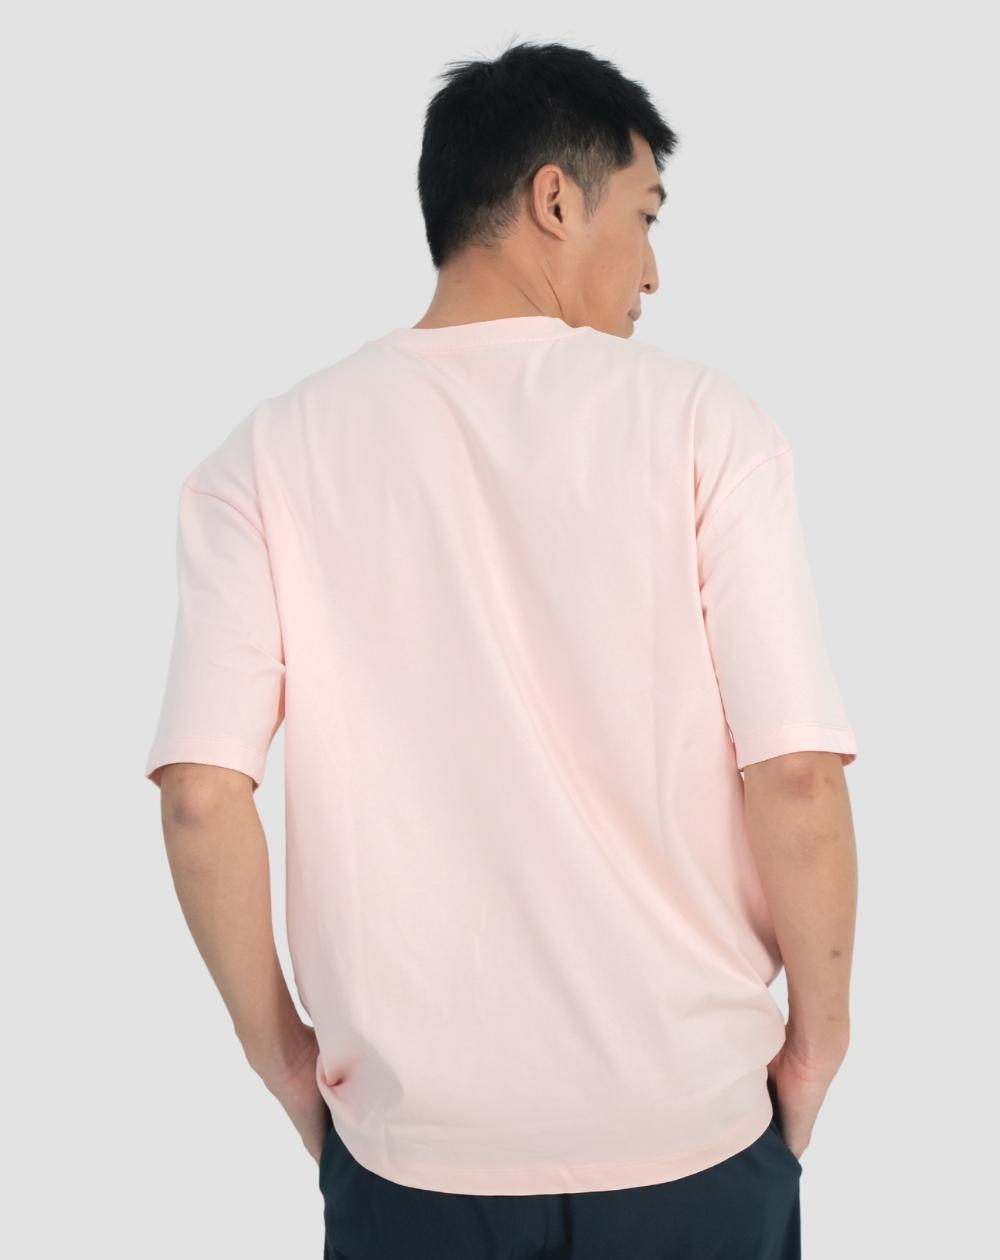 Oversized Short Sleeve Tee | Unisex Light Pink